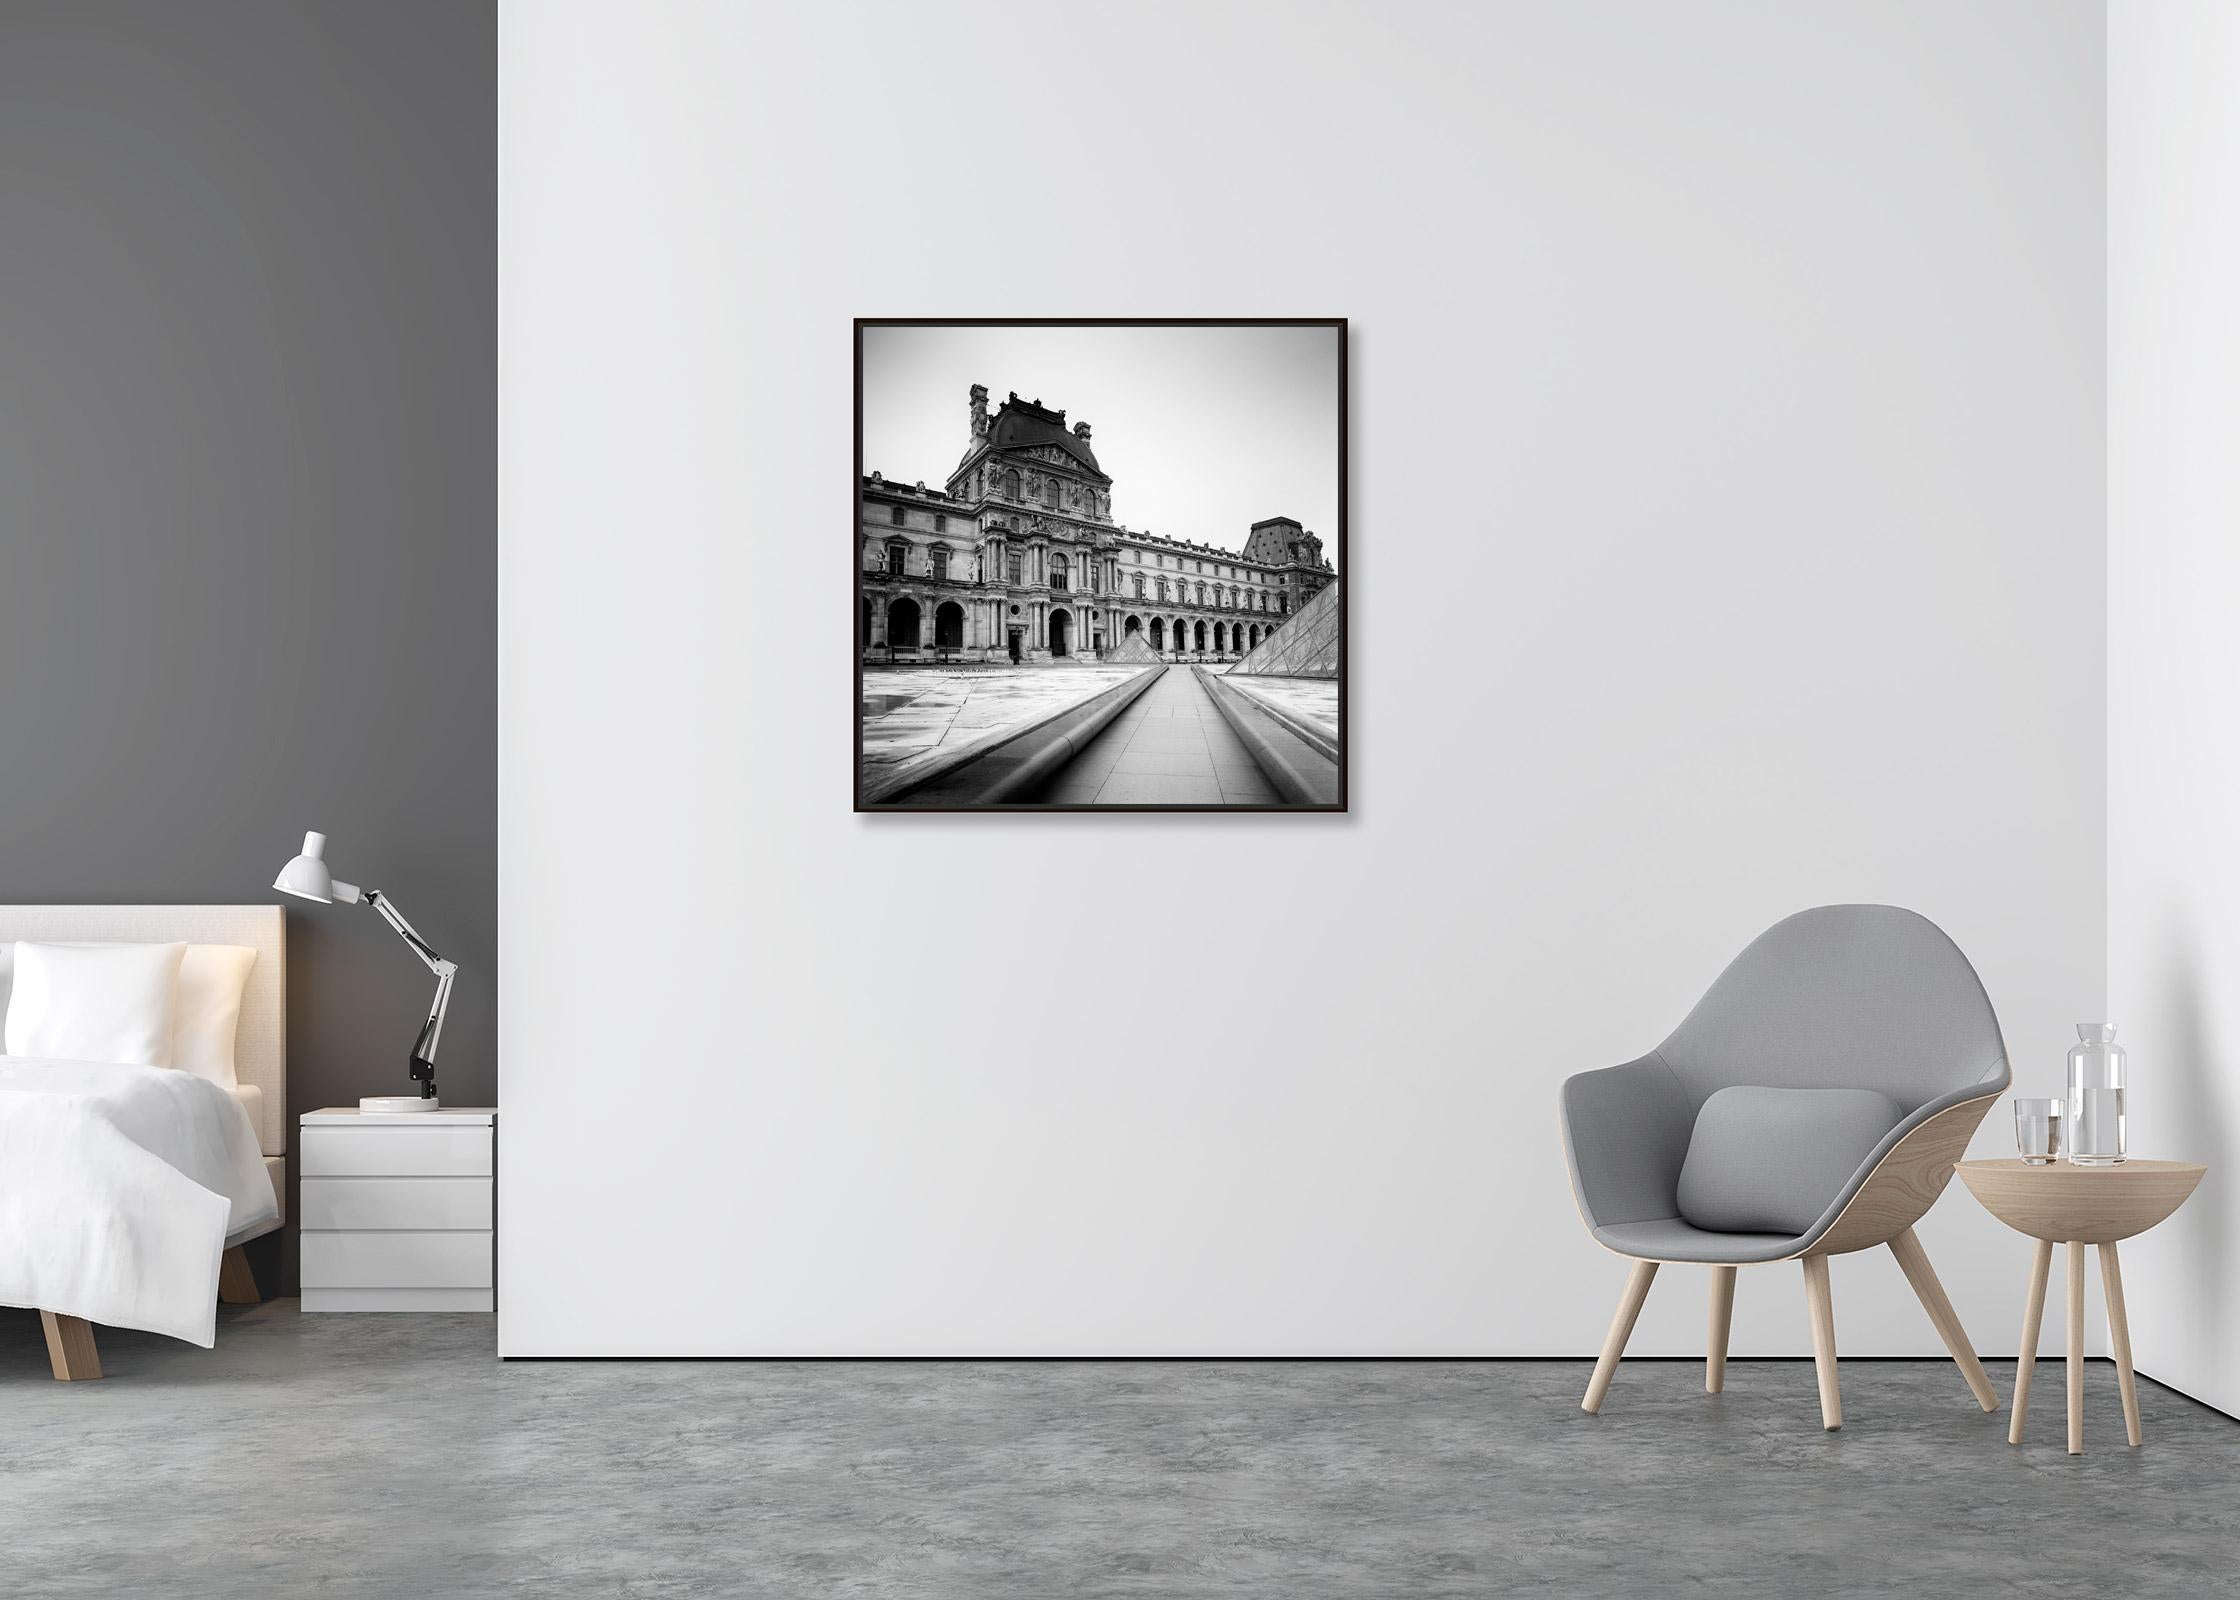 Pavillon Denon, Louvre, Paris, France, black and white cityscape art photography - Contemporary Photograph by Gerald Berghammer